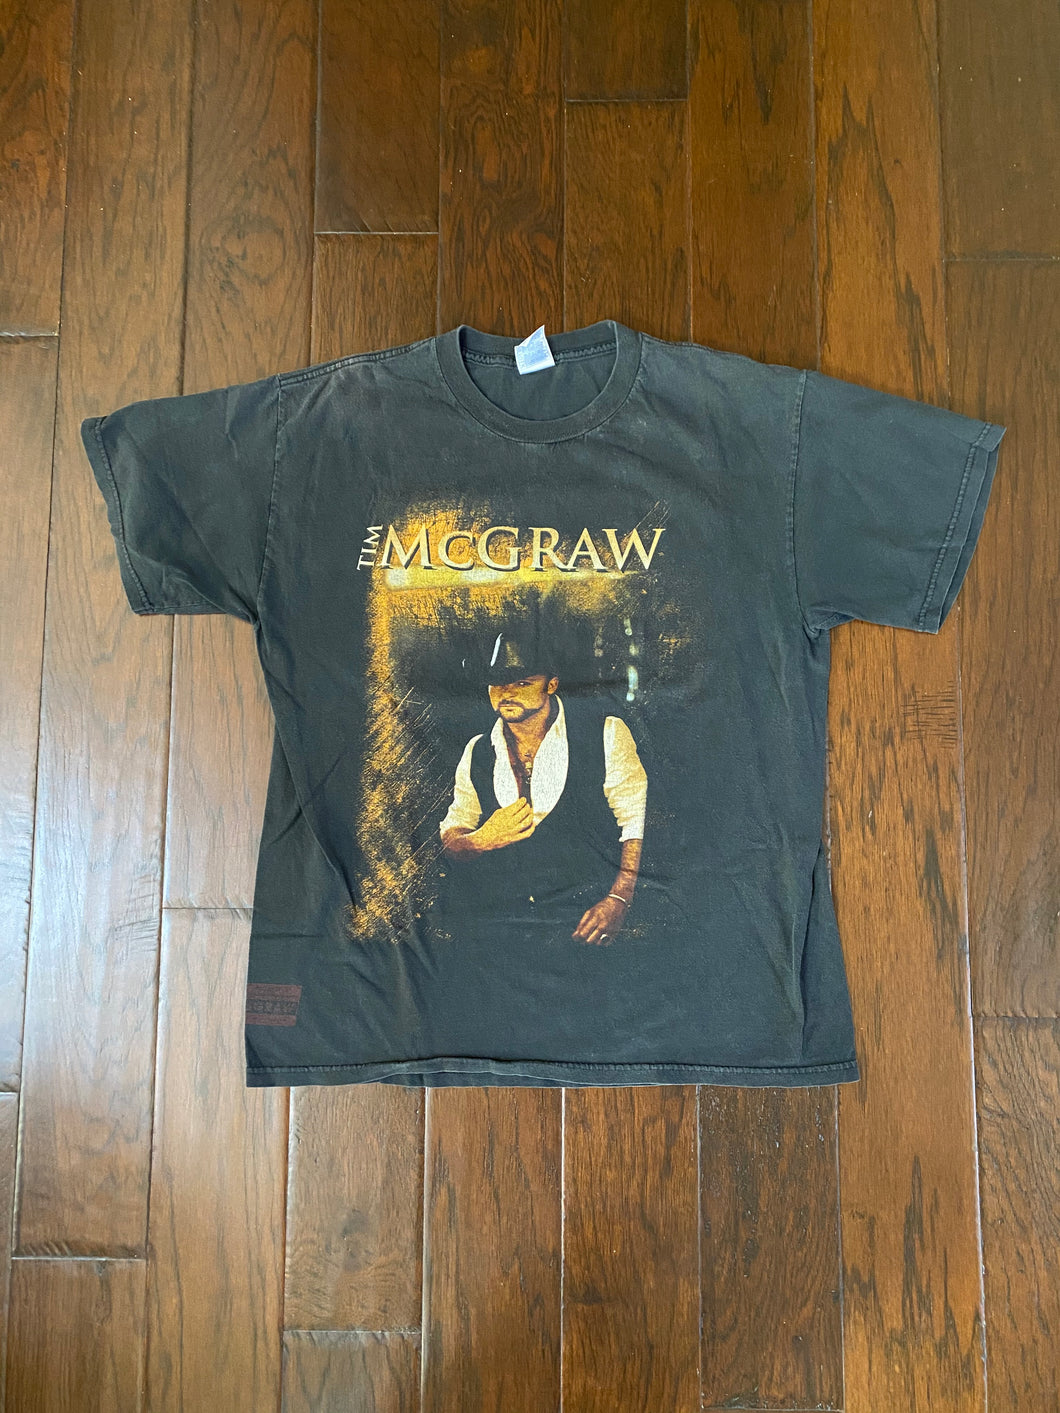 Tim McGraw 2007 Tour Vintage Distressed T-shirt